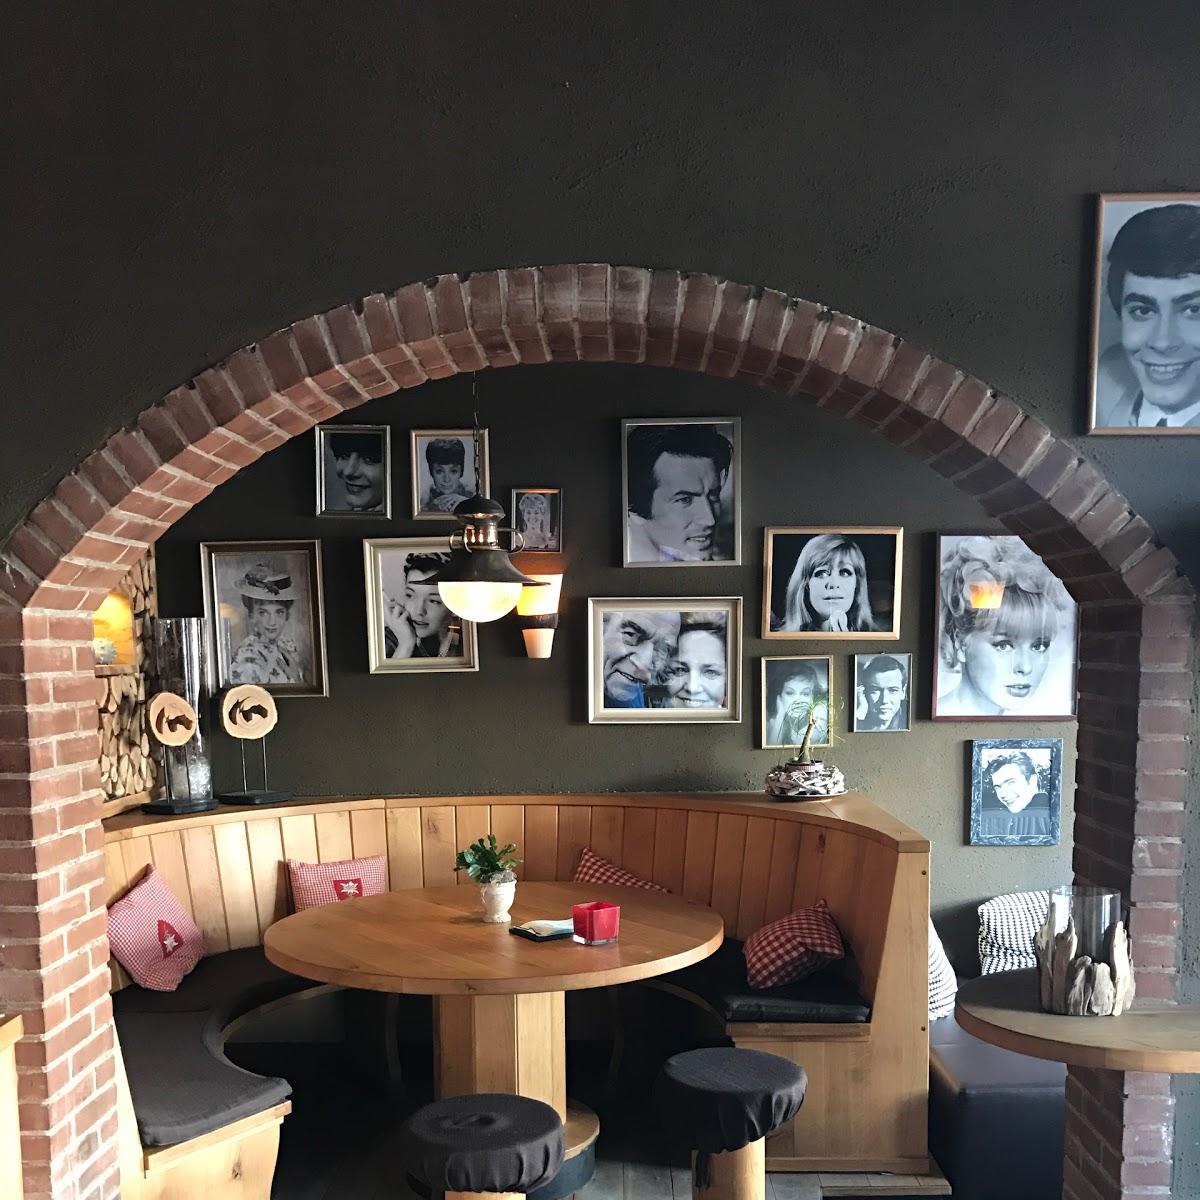 Restaurant "er Kaffeerösterei AG" in Langeoog